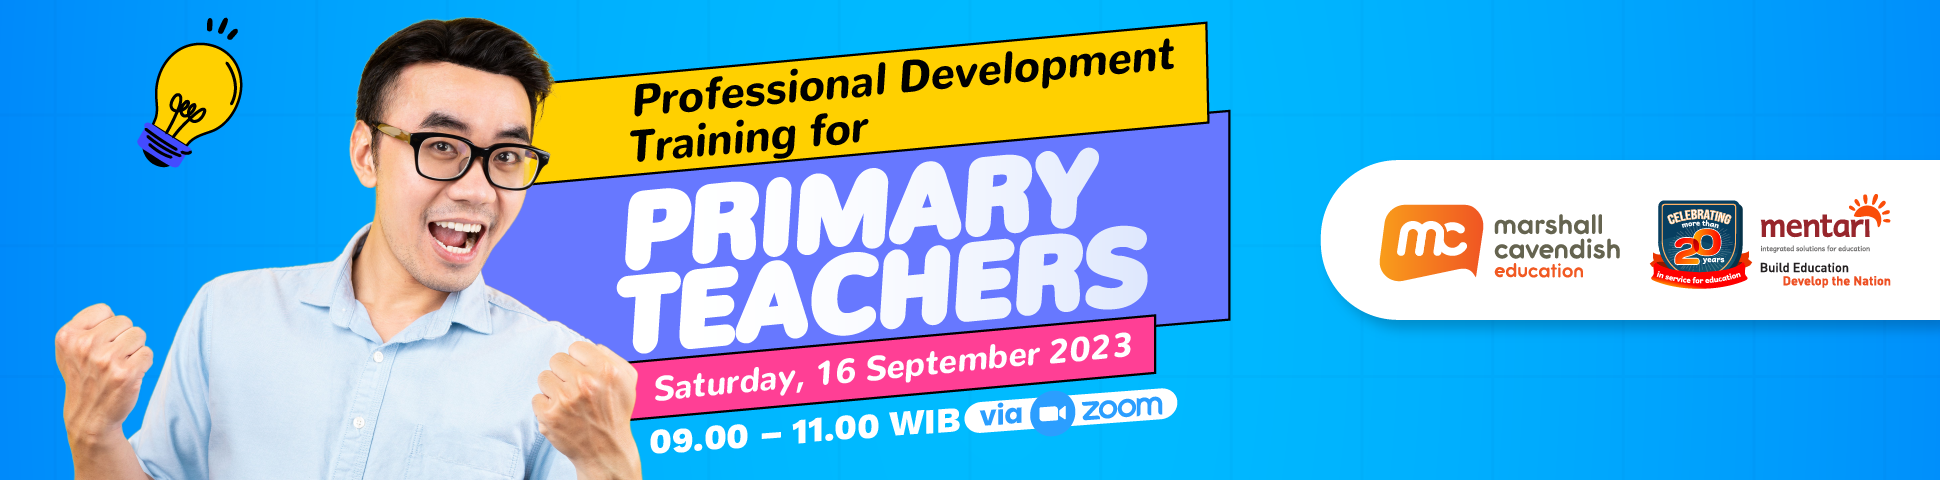 Professional Development Training for Primary Teachers - 2023